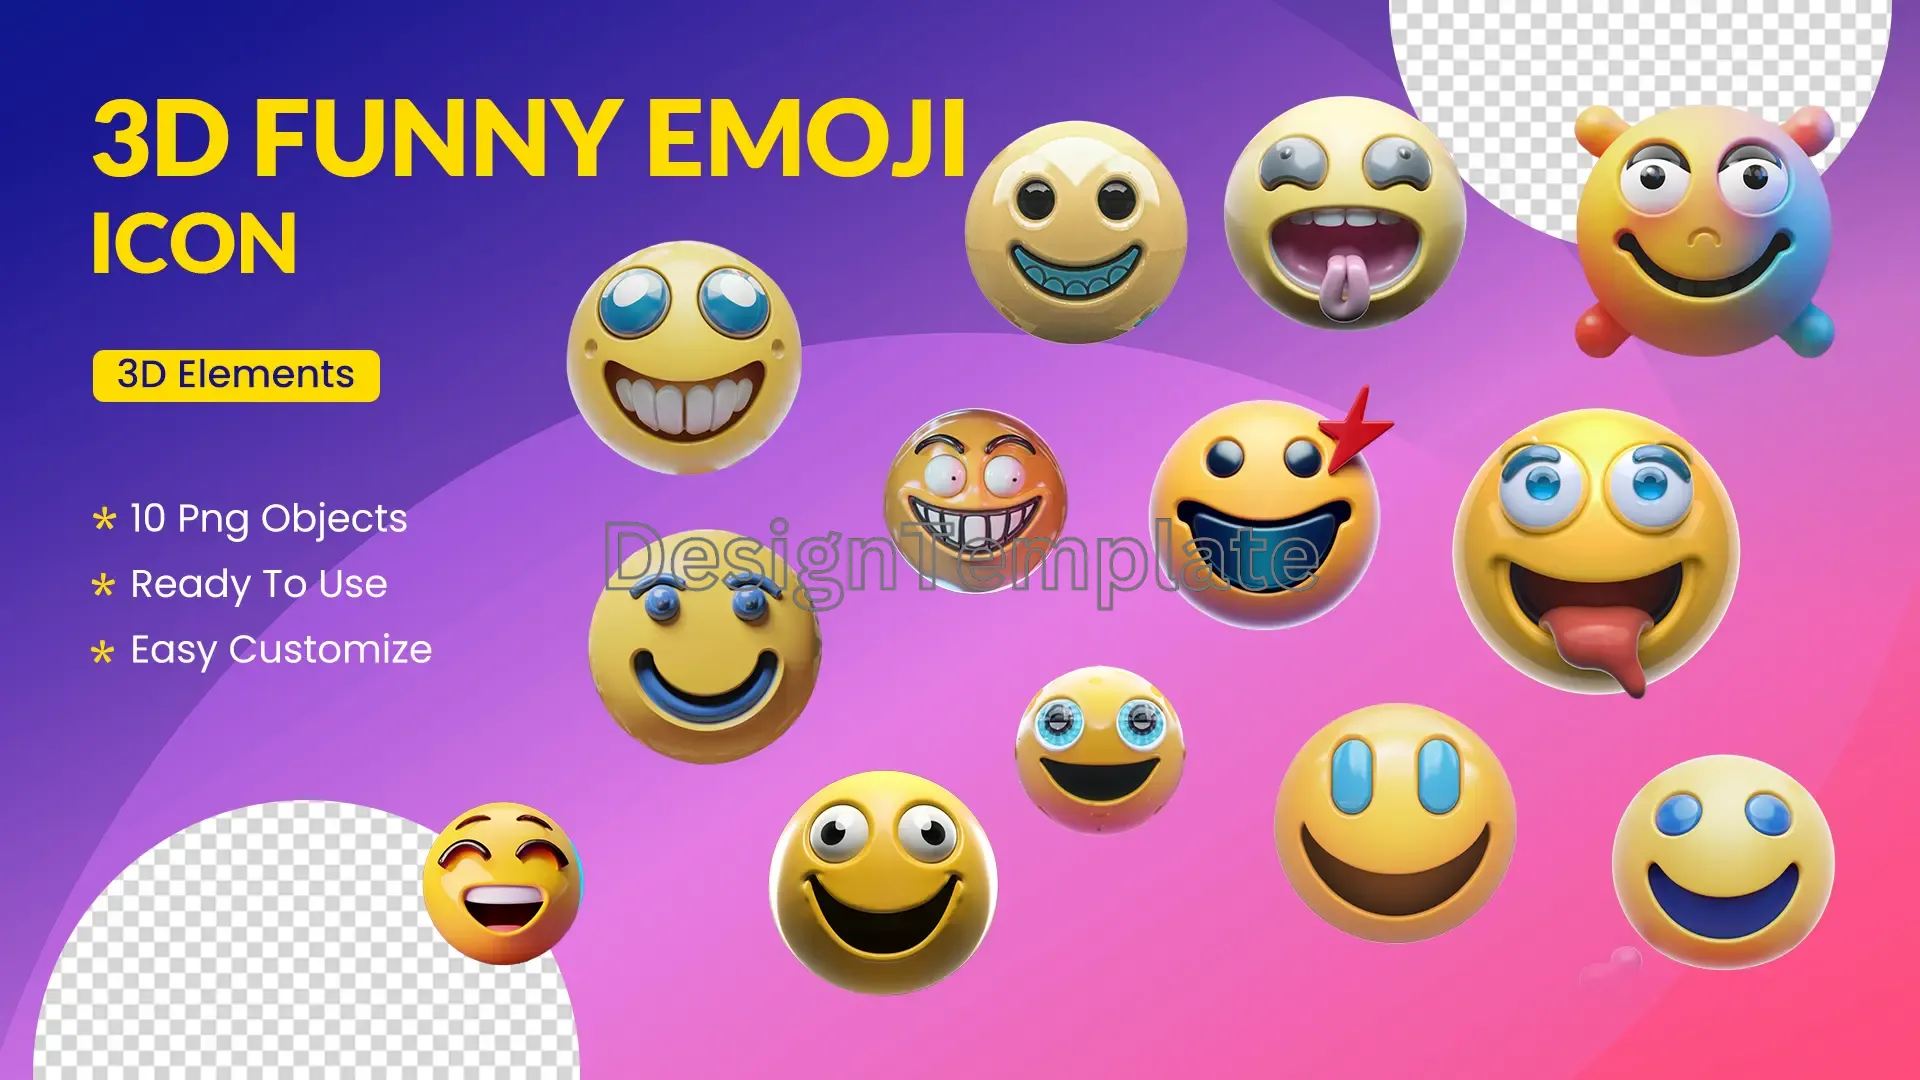 Smiley Spectrum 3D Funny Emoji Icon Collection image